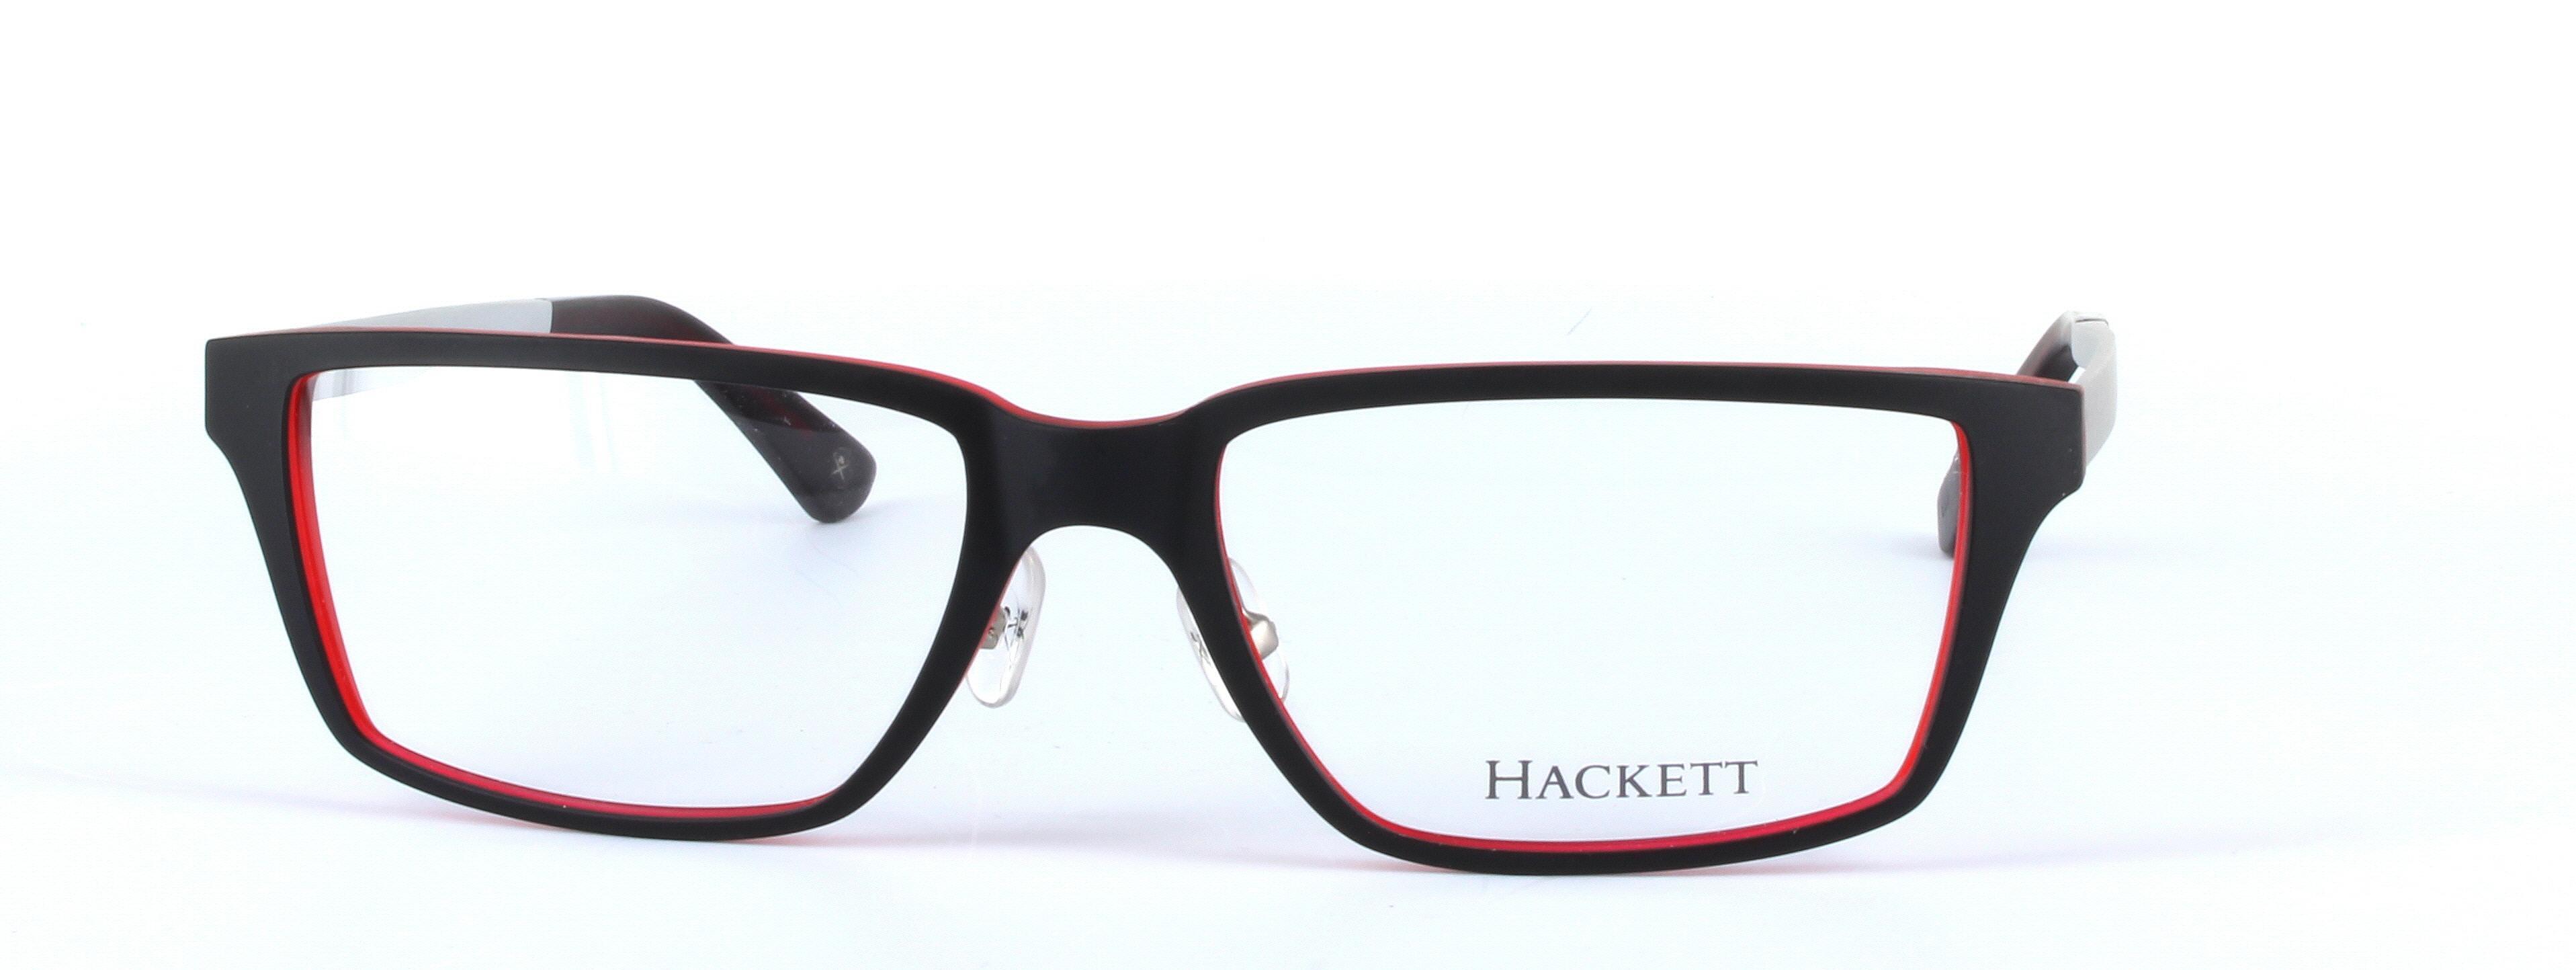 HACKETT (HEK1155-040) Black Full Rim Rectangular Acetate Glasses - Image View 5